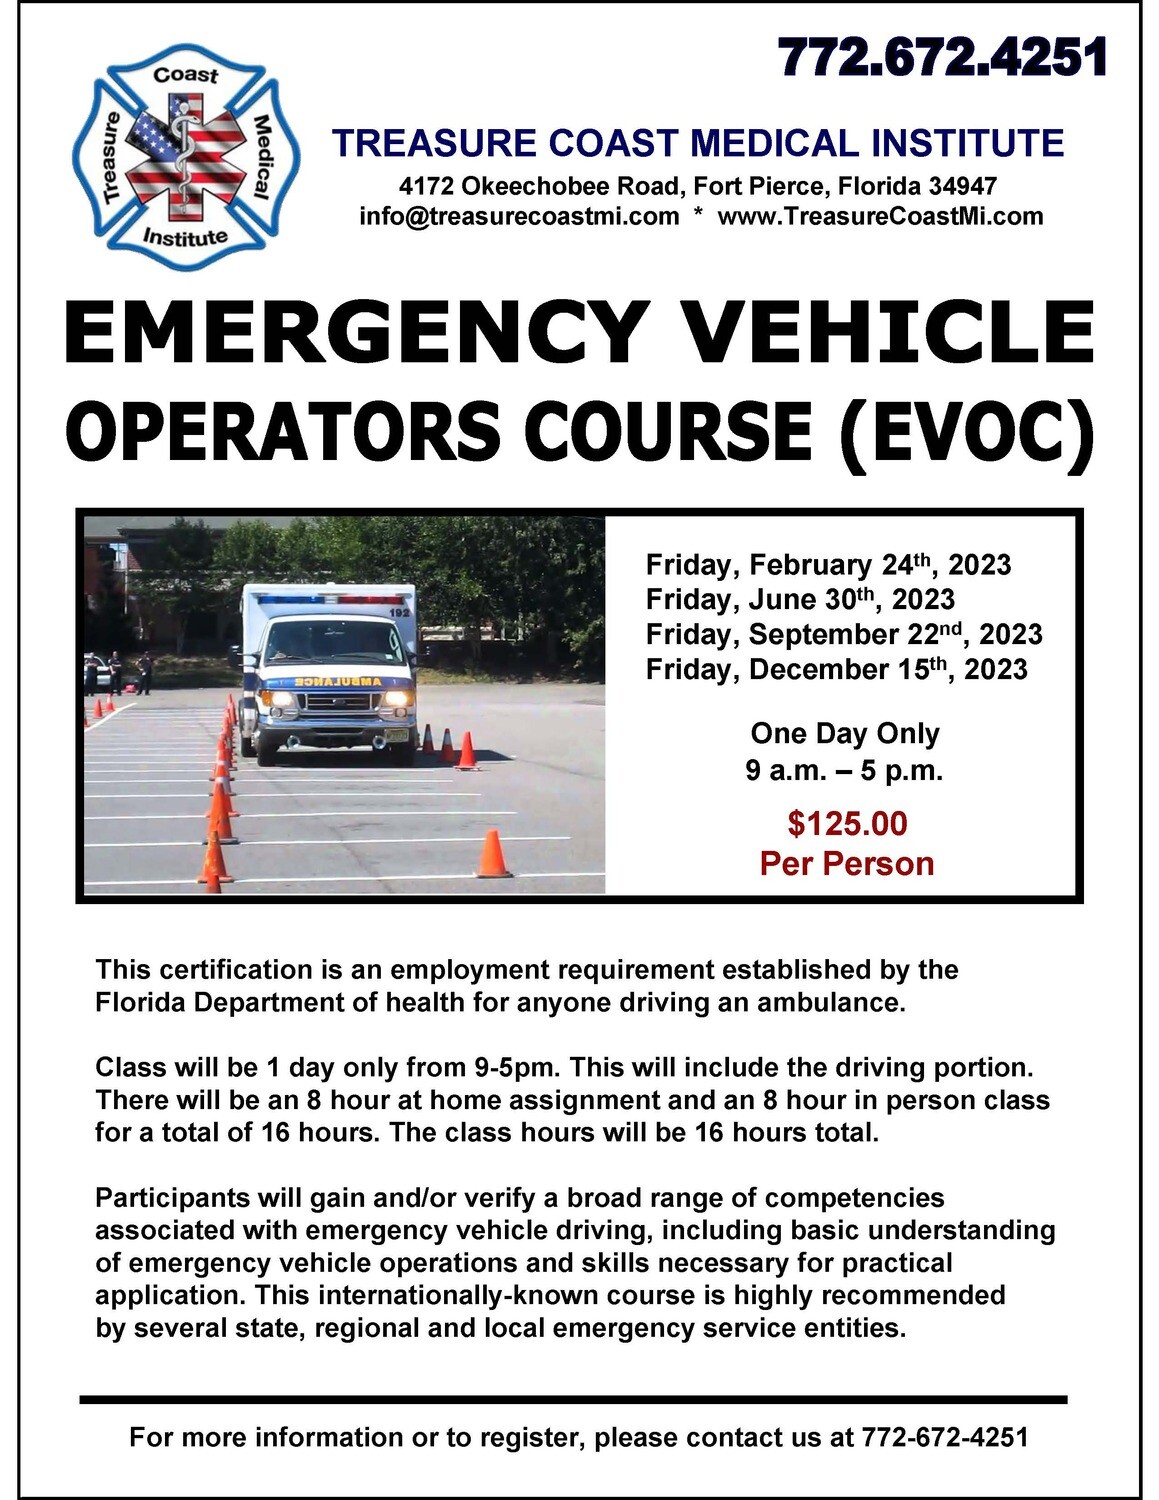 Emergency Vehicle Operators Course (EVOC) February 24th 9-5pm